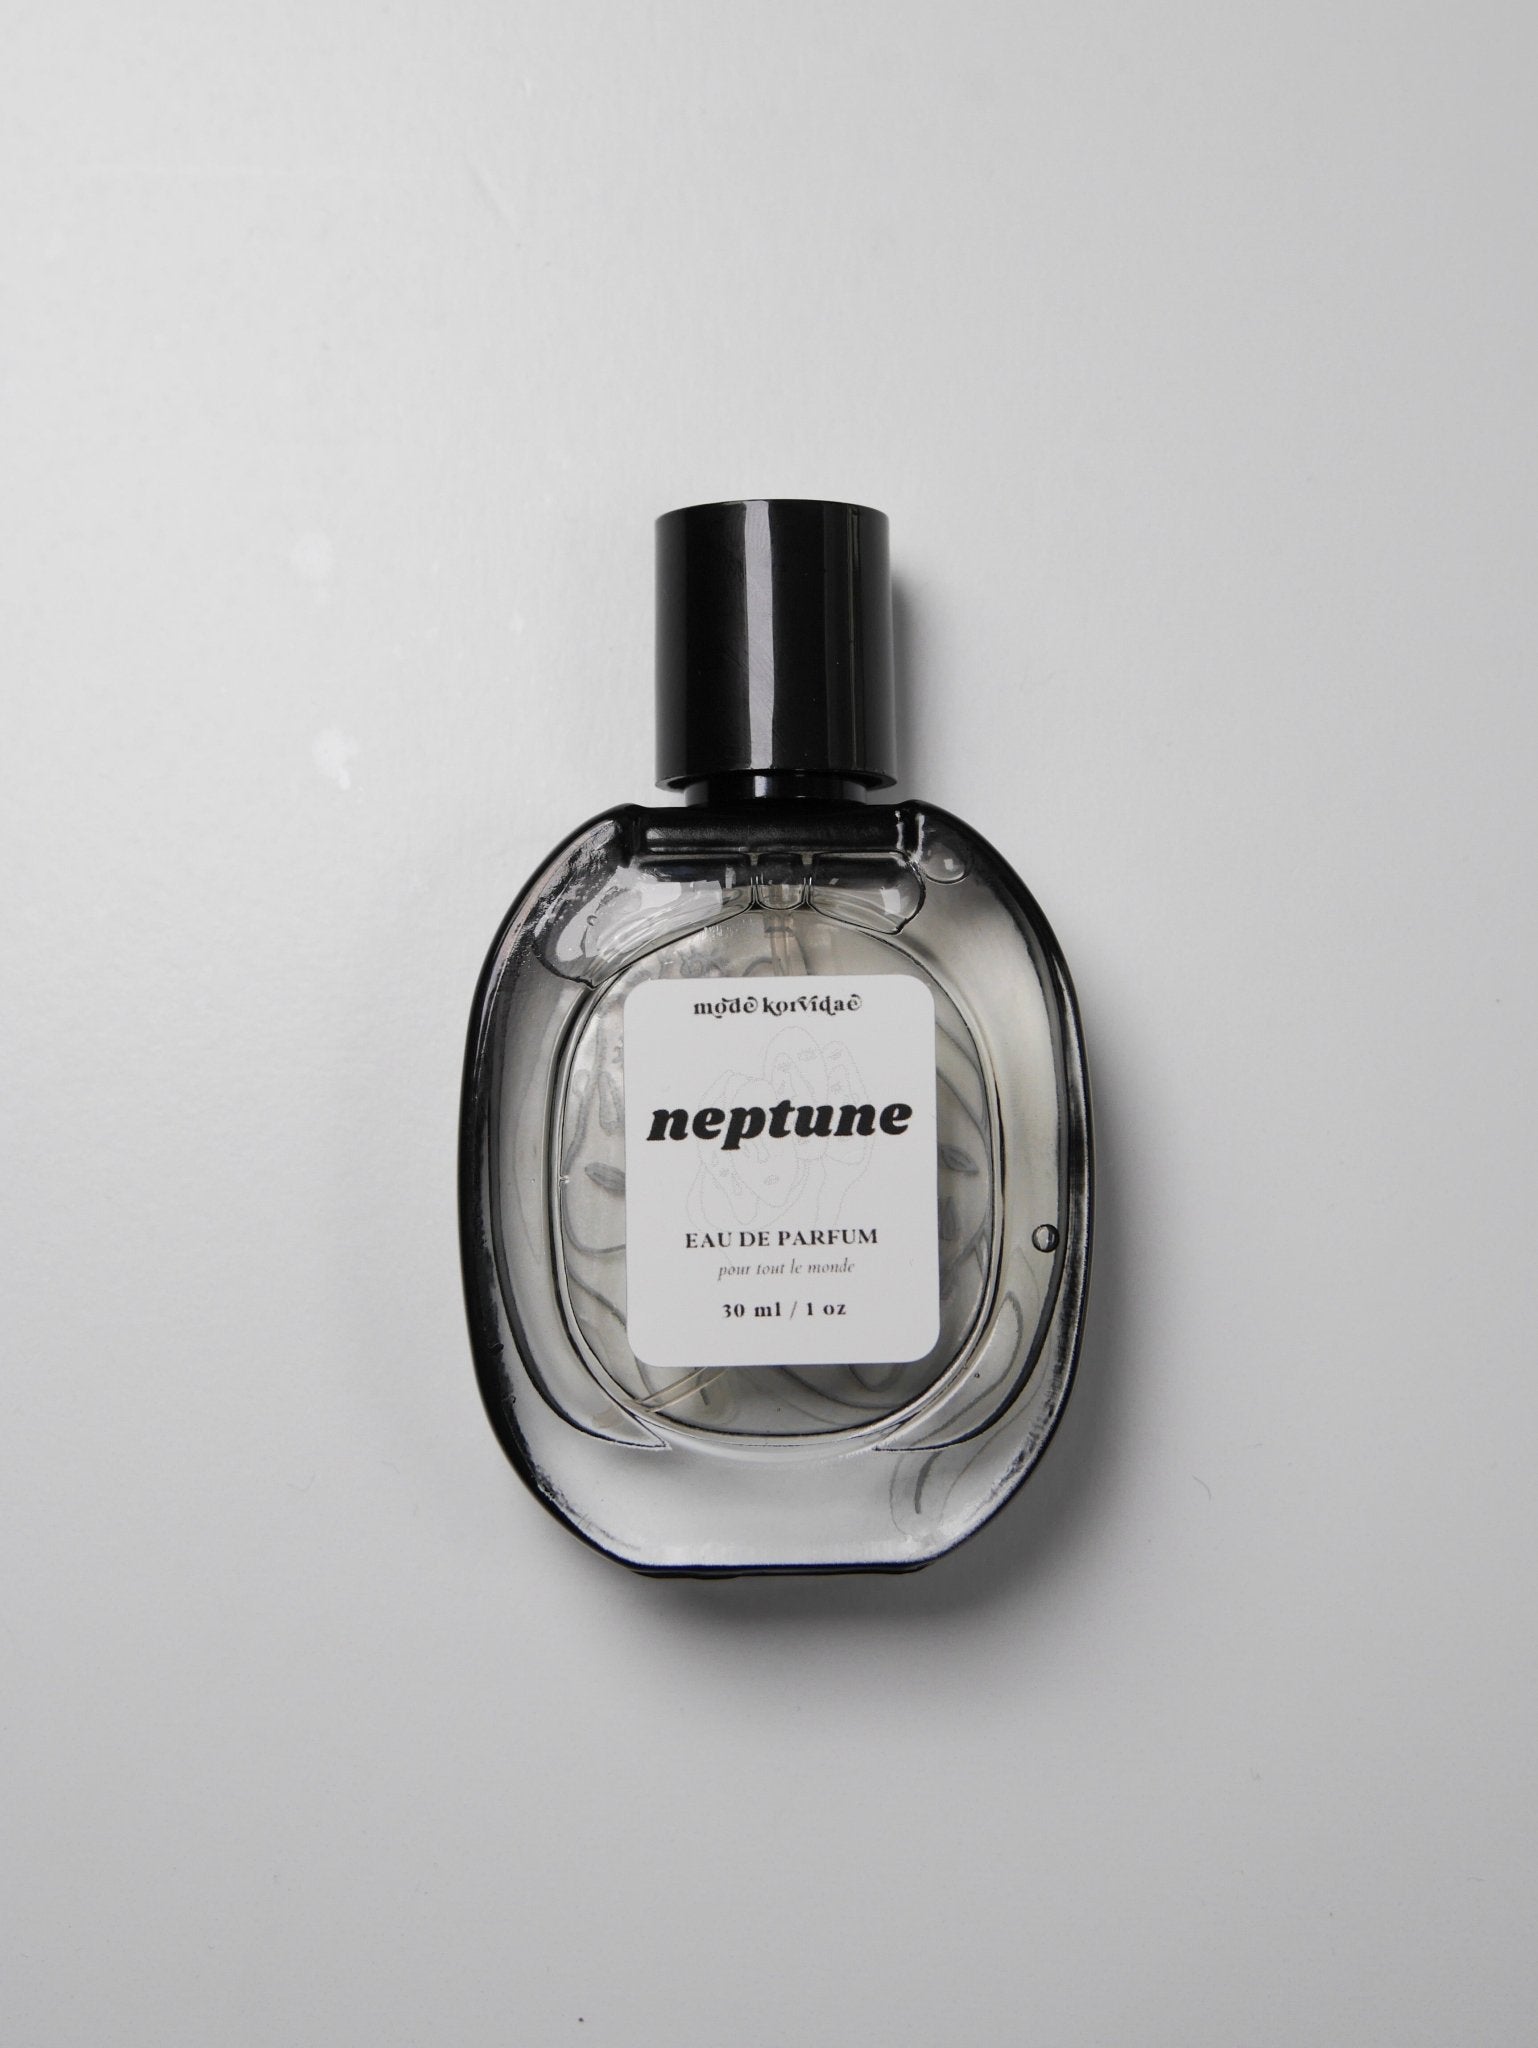 Neptune Perfume - Mode Korvidae